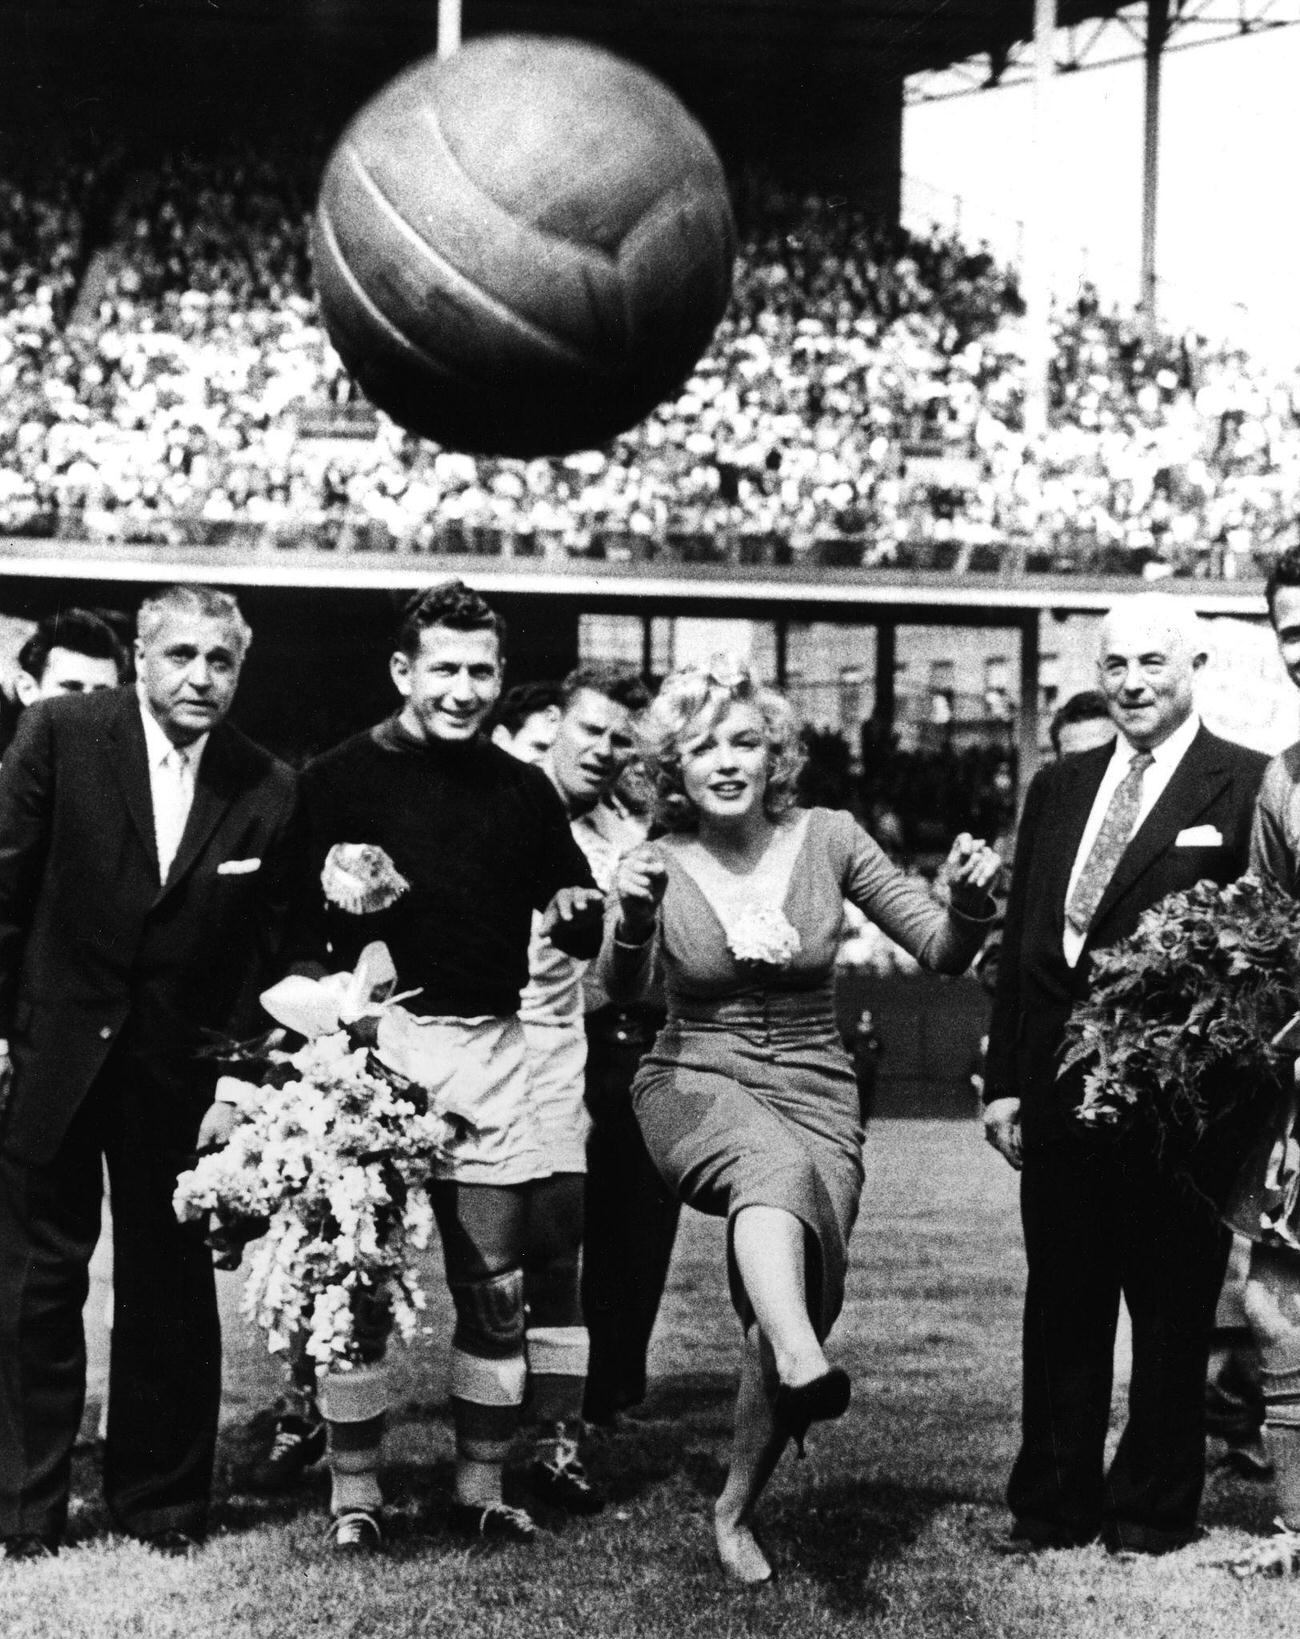 Marilyn Monroe And Israeli Goalkeeper Kick Soccer Ball At Ebbets Field, 1957